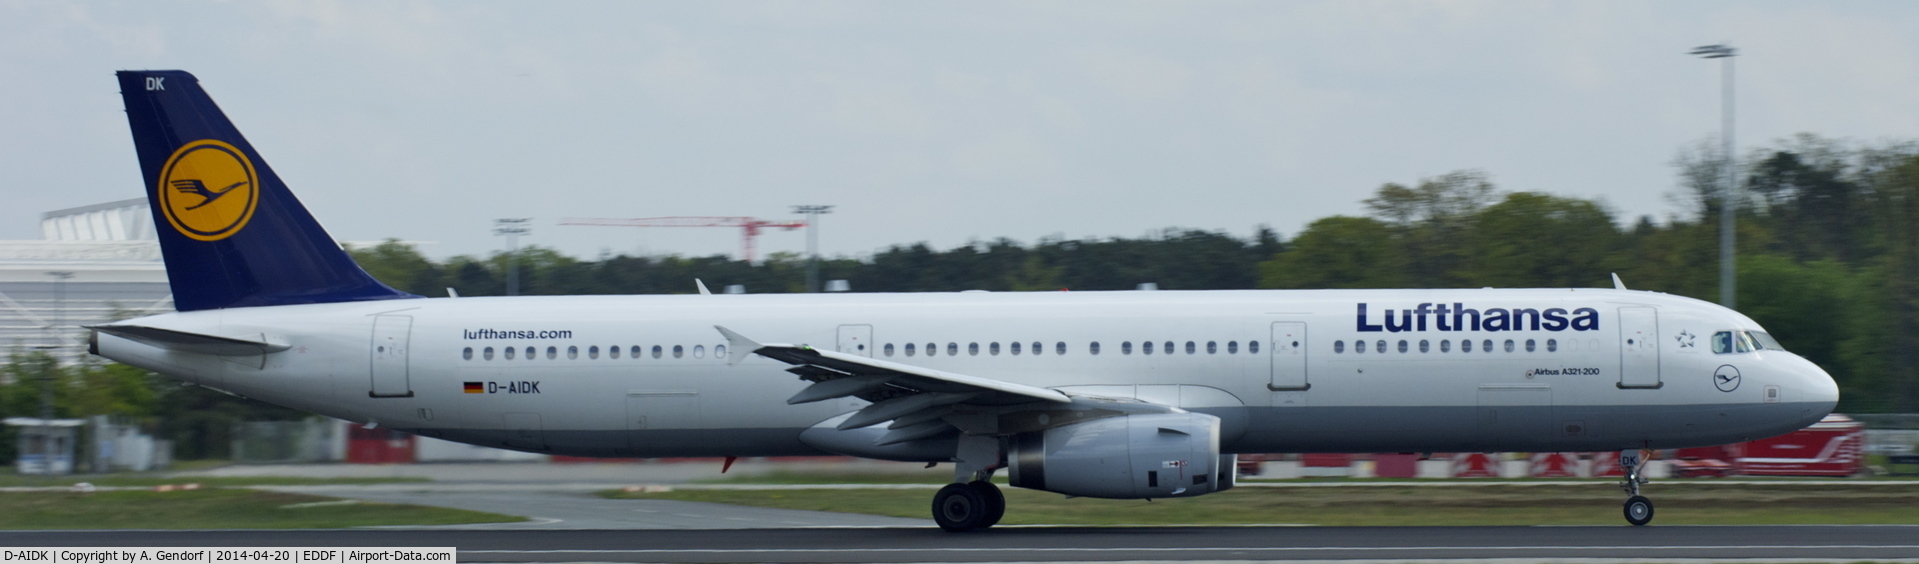 D-AIDK, 2011 Airbus A321-231 C/N 4819, Lufthansa, is here speeding up on RWY 18 at Frankfurt Rhein/Main Int'l(EDDF)